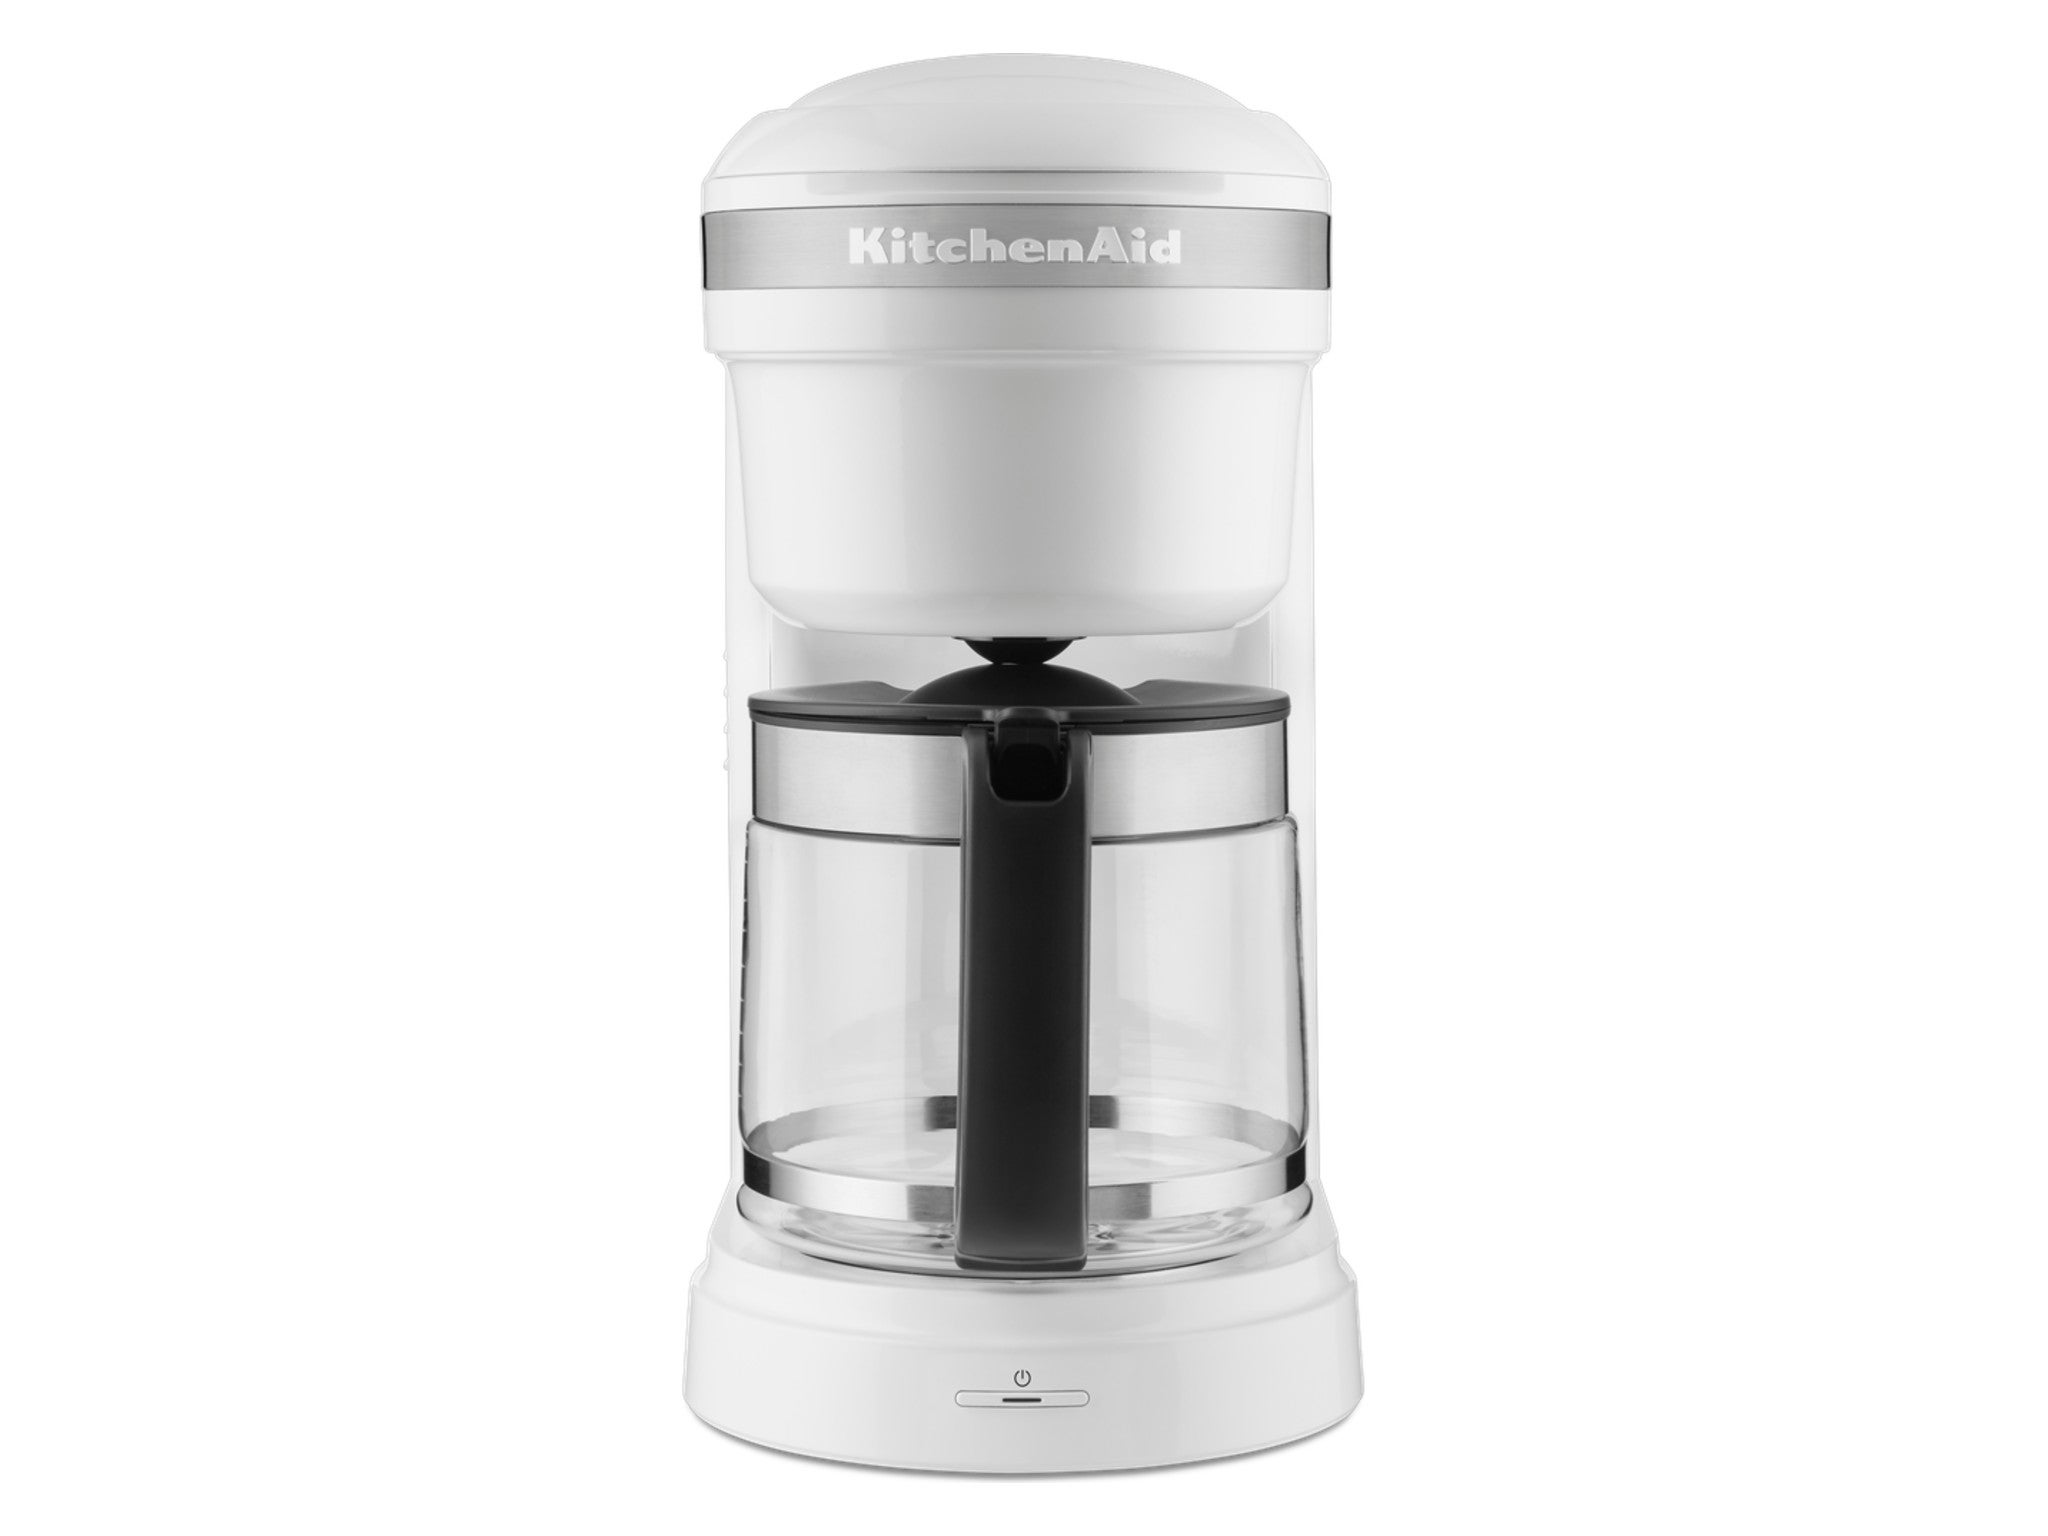 KitchenAid Drip Filter Coffee Machine done.jpg